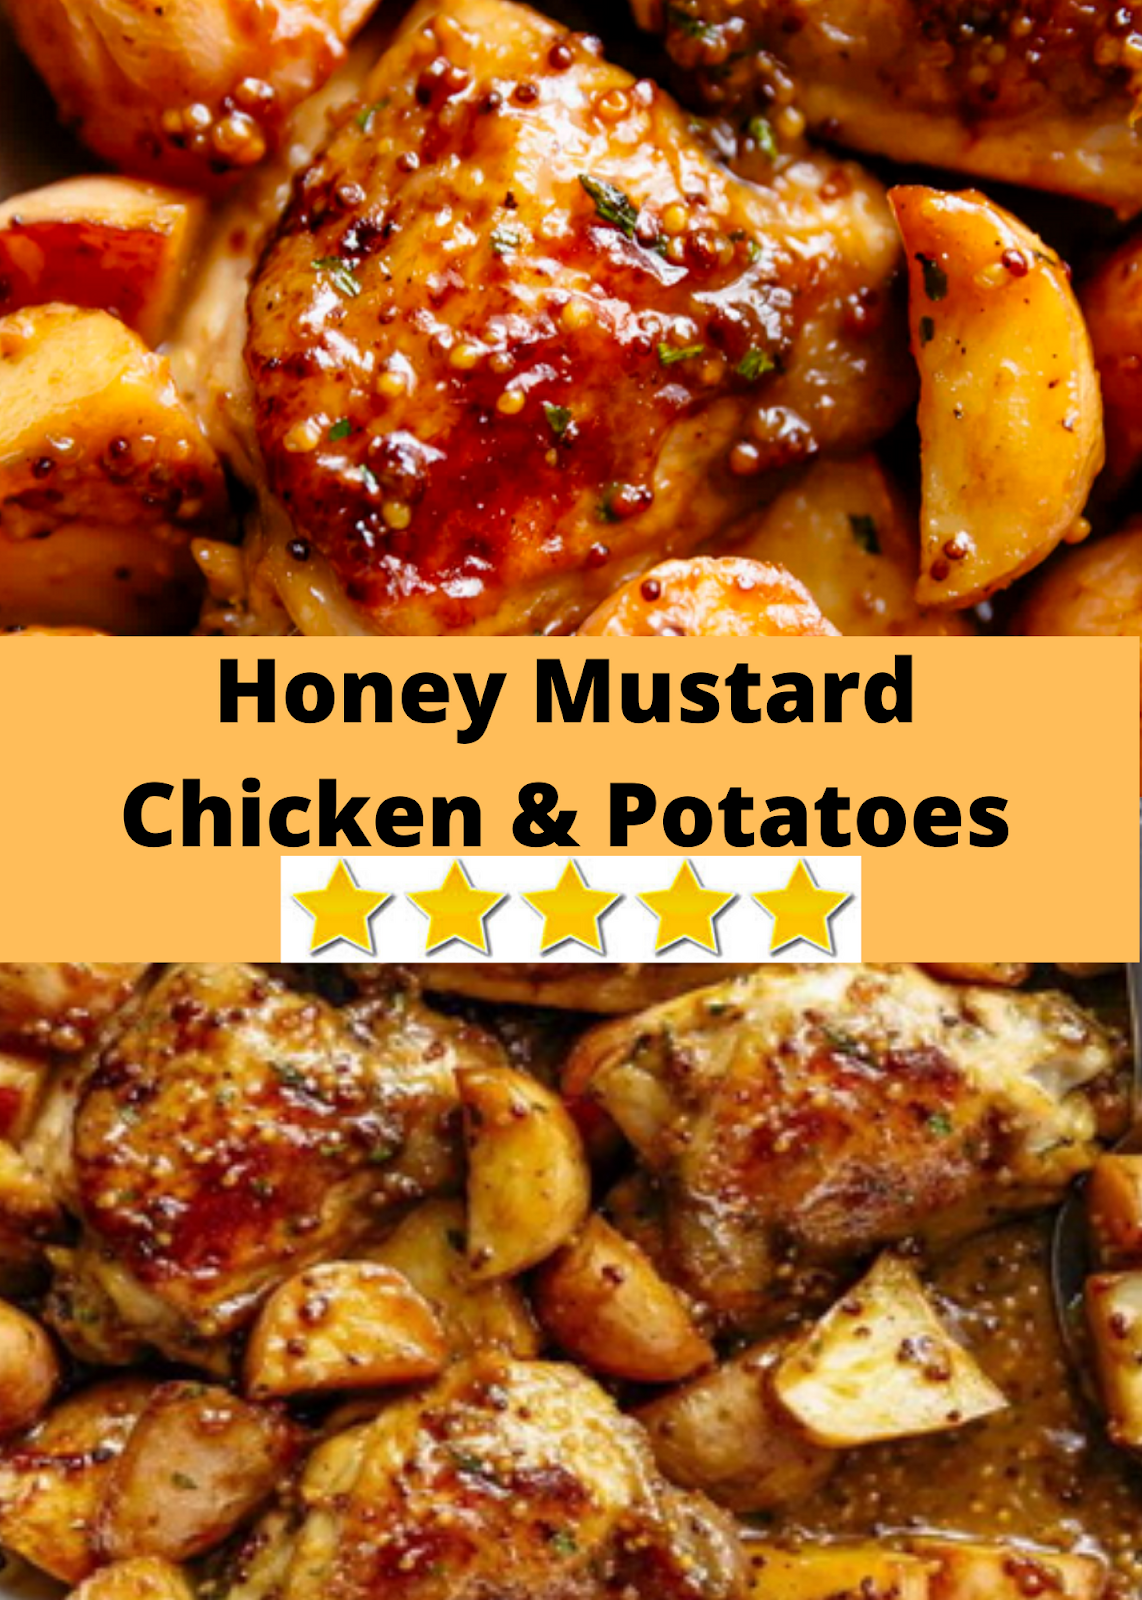 Honey Mustard Chicken & Potatoes